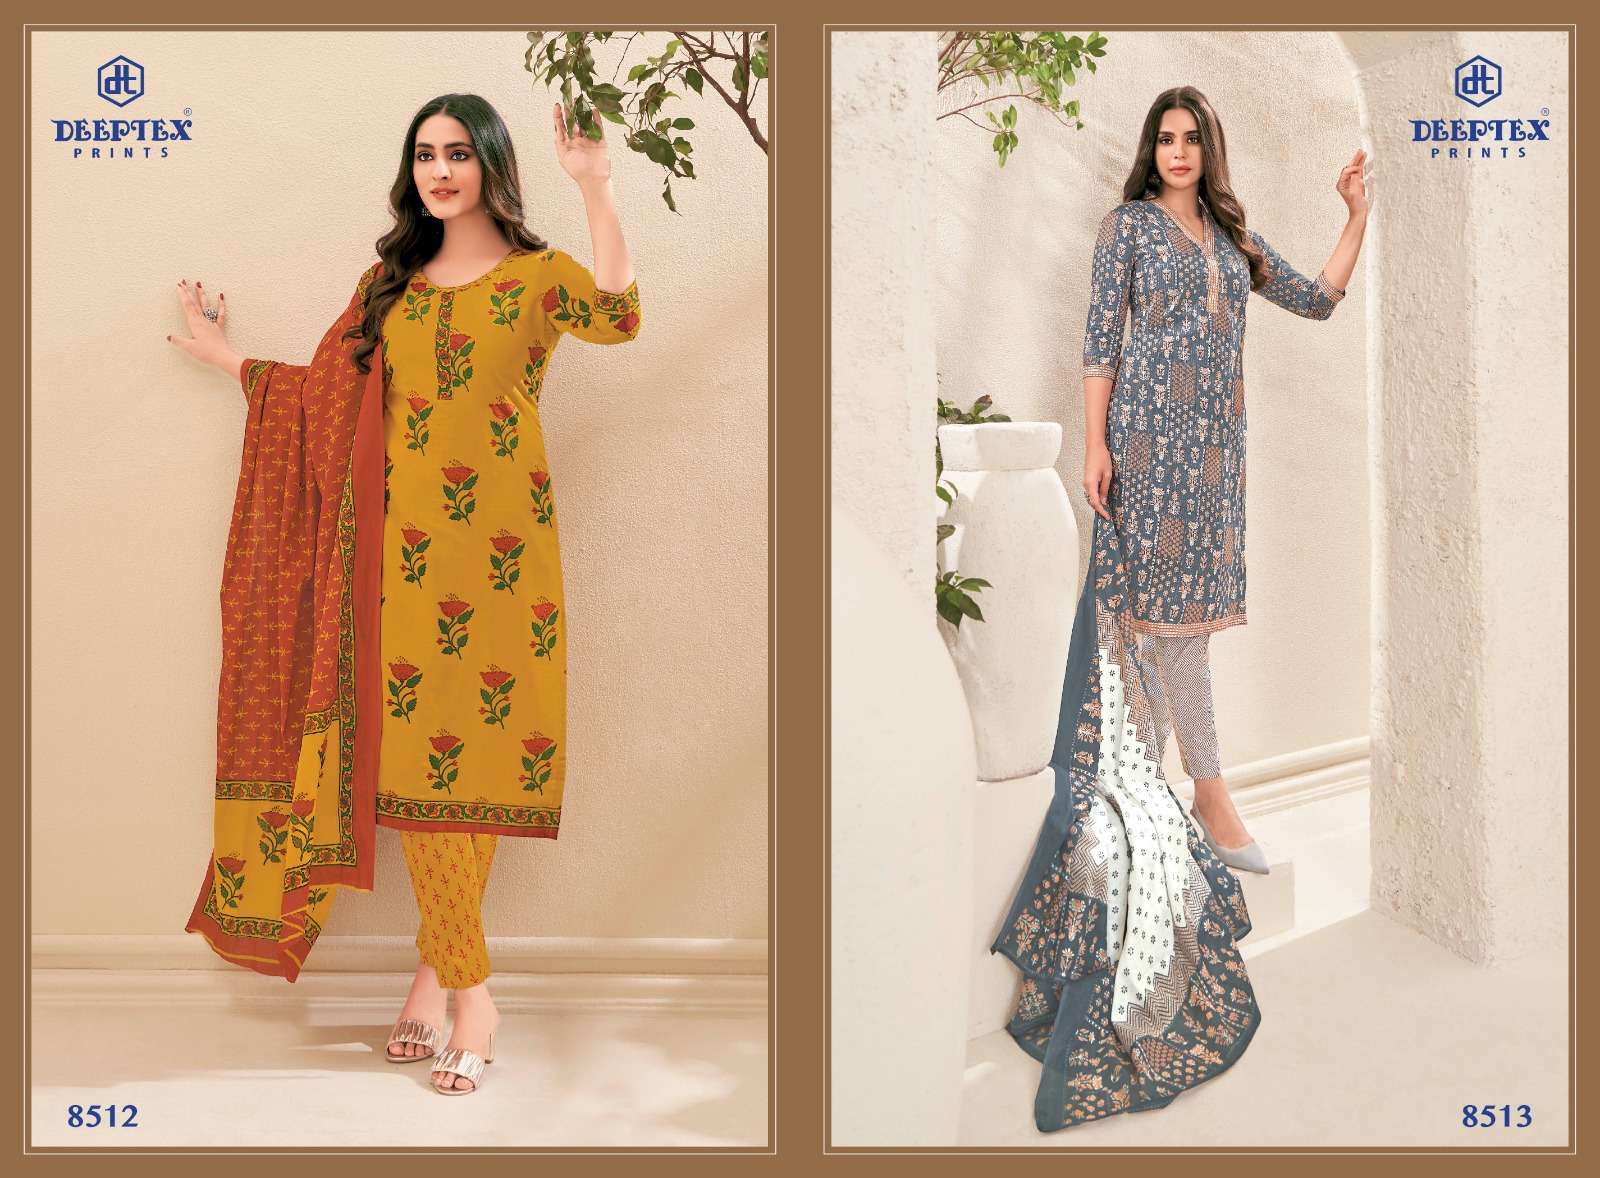 Deeptex Miss India Vol-85 – Dress Material Wholesale Catalog